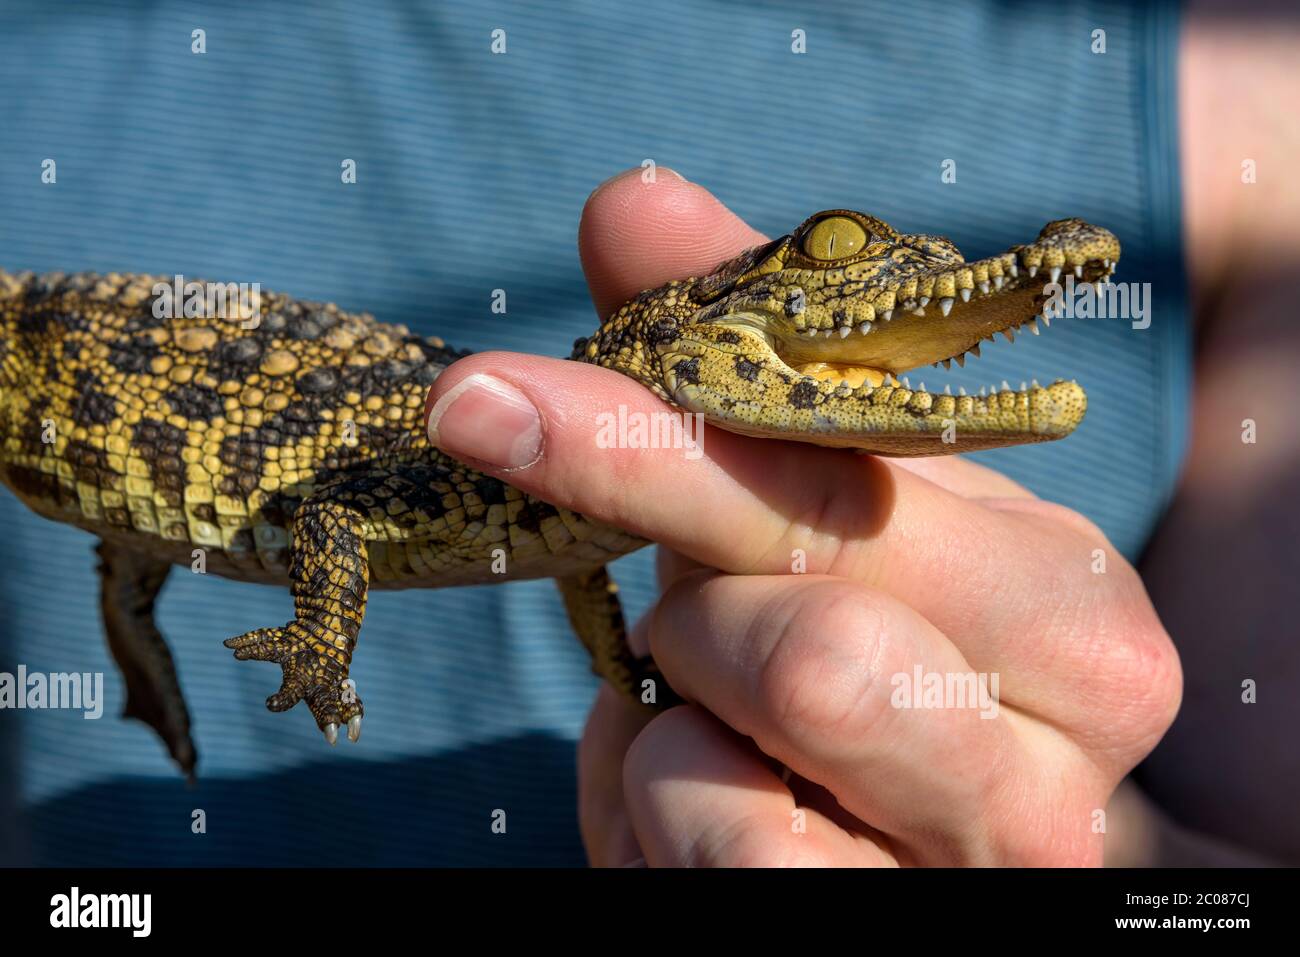 Man holding a baby crocodile Stock Photo